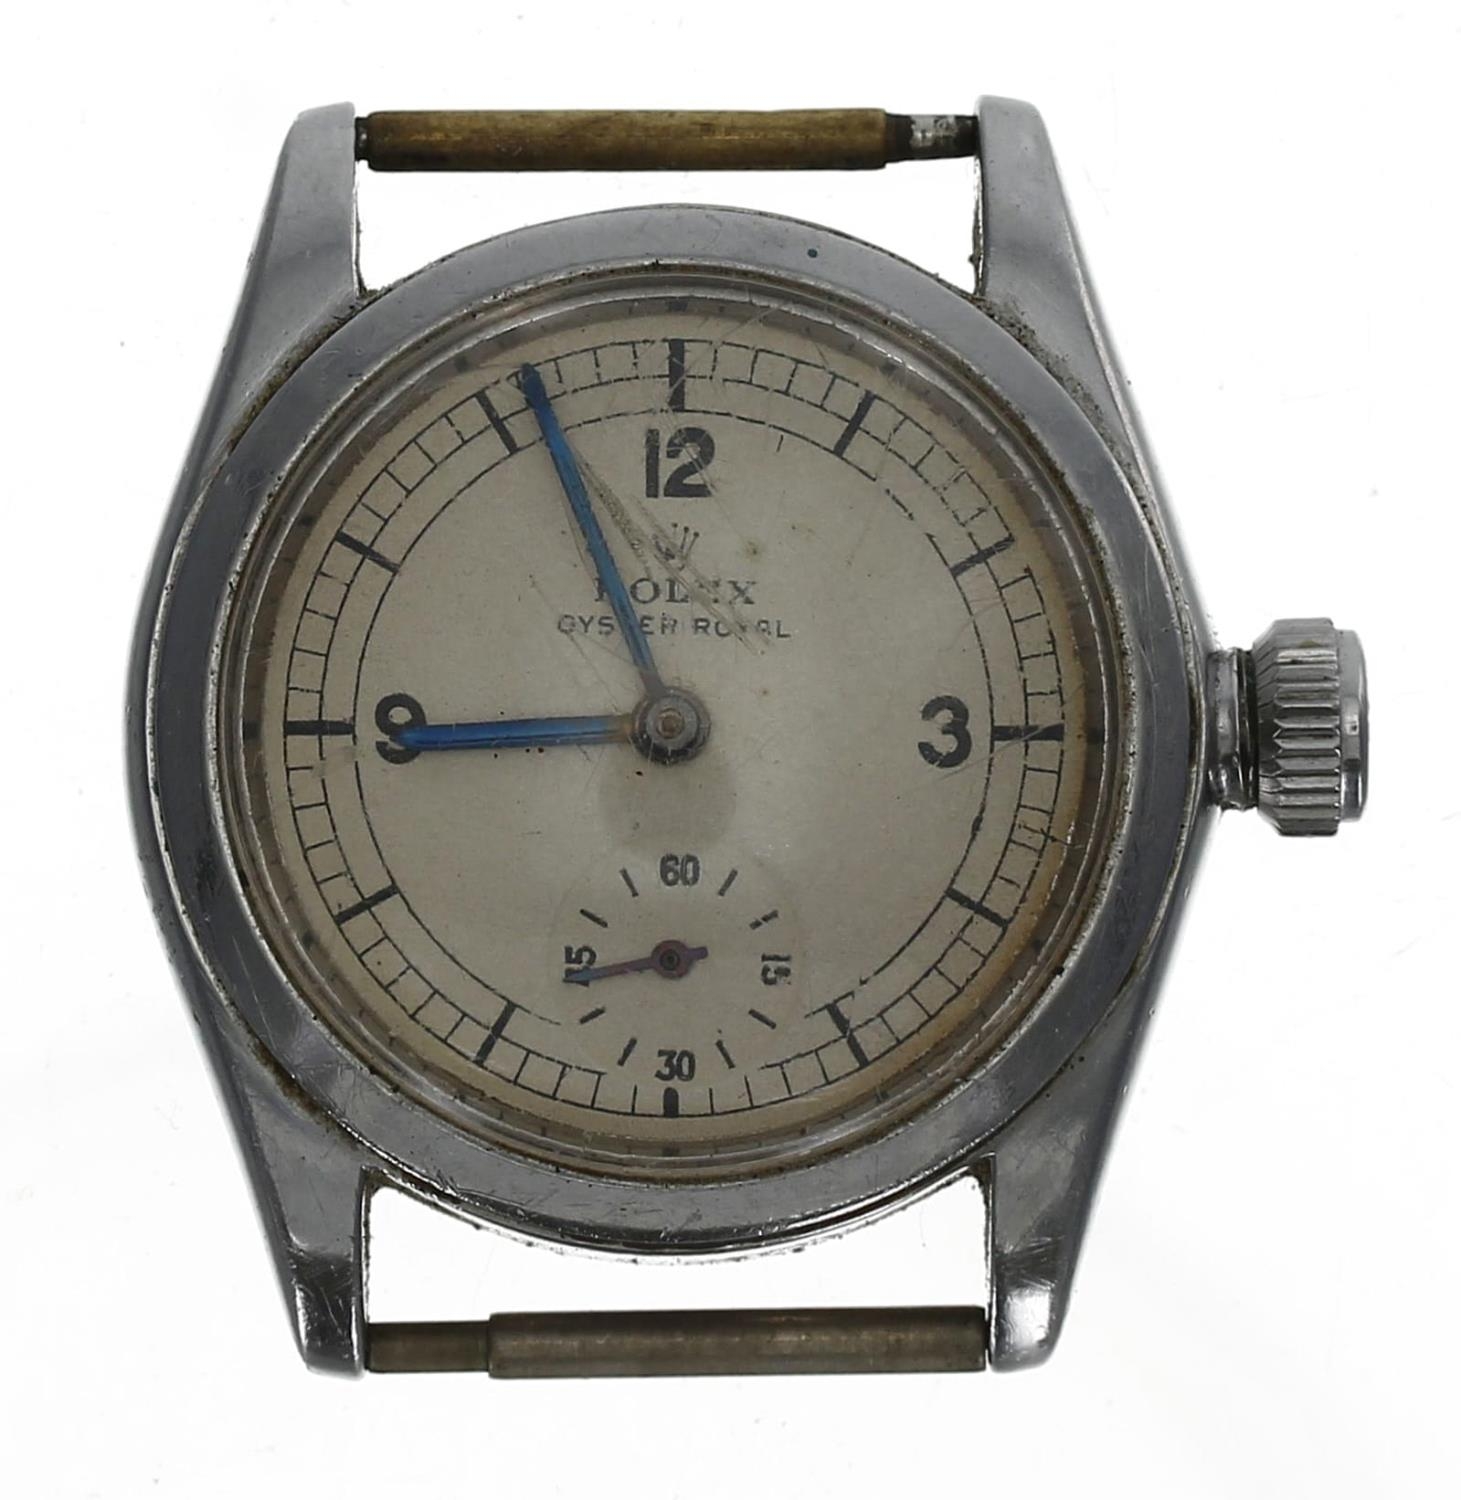 Rolex Oyster Royal mid-size stainless steel gentleman's wristwatch, serial no. 73xxx, circa 1954,